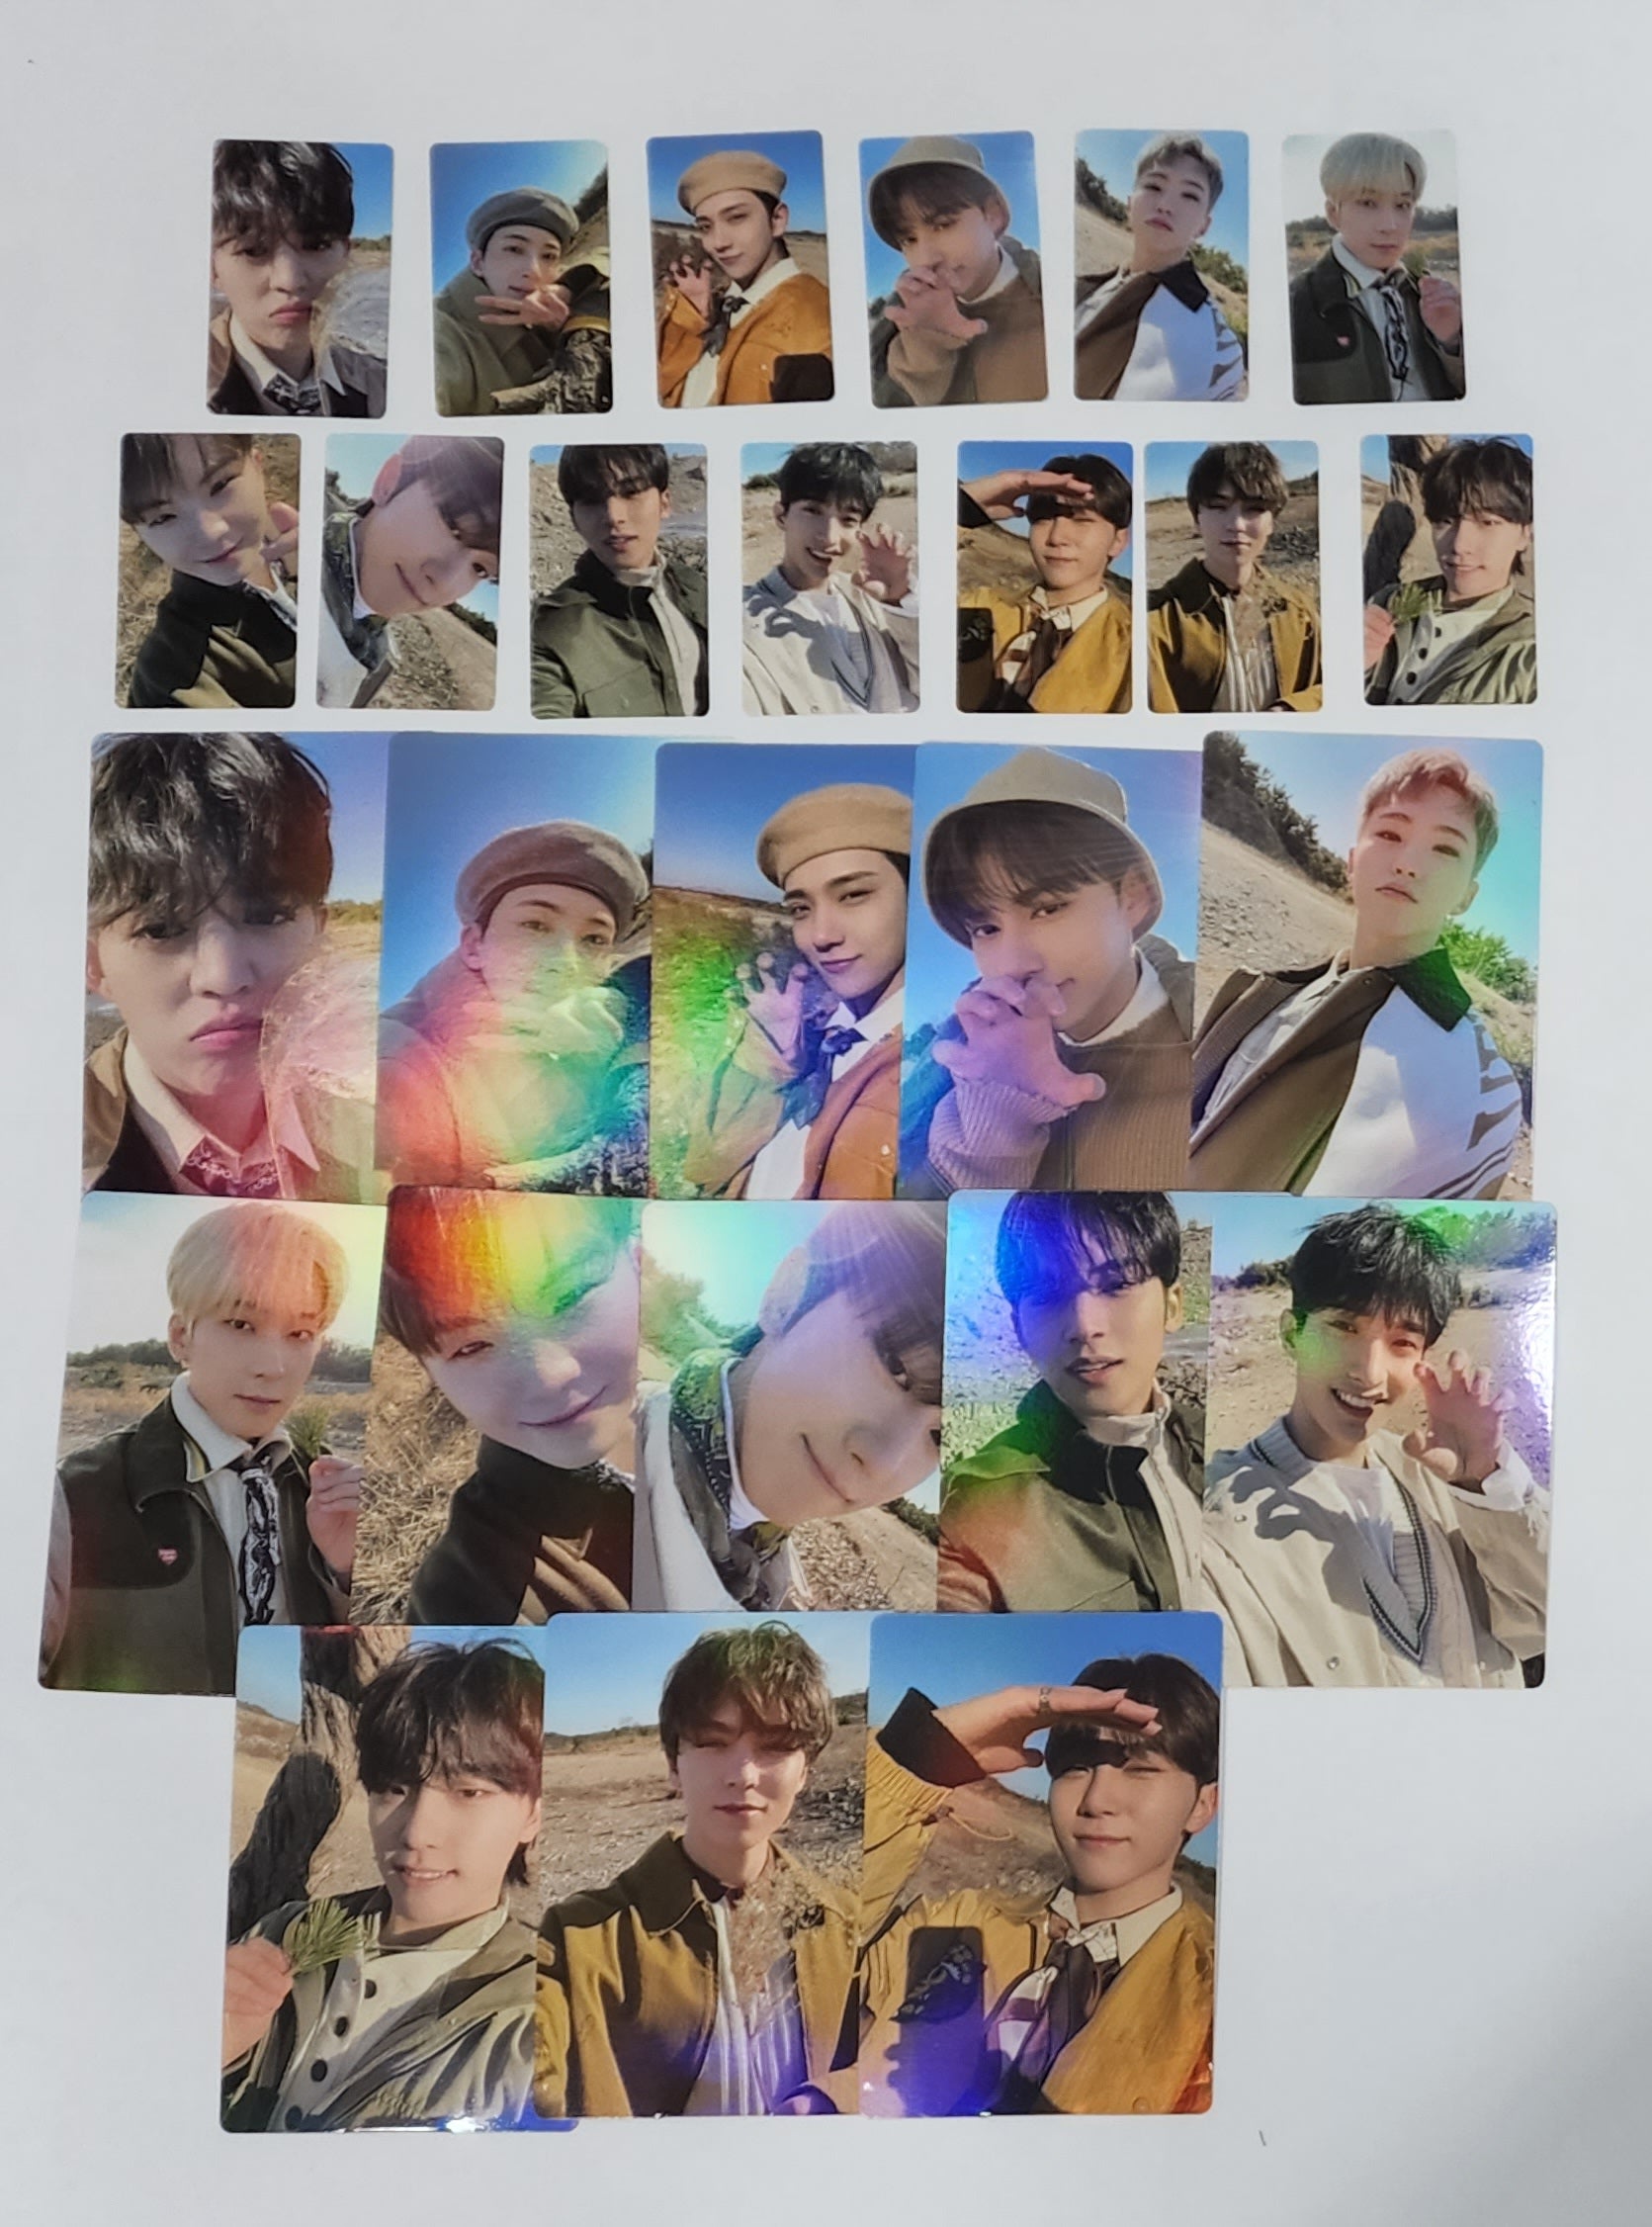 Seventeen 'FACE THE SUN' 4TH ALBUM - Weverse Shop Pre-Order Benefit  Photocard, Hologram Photo Stand